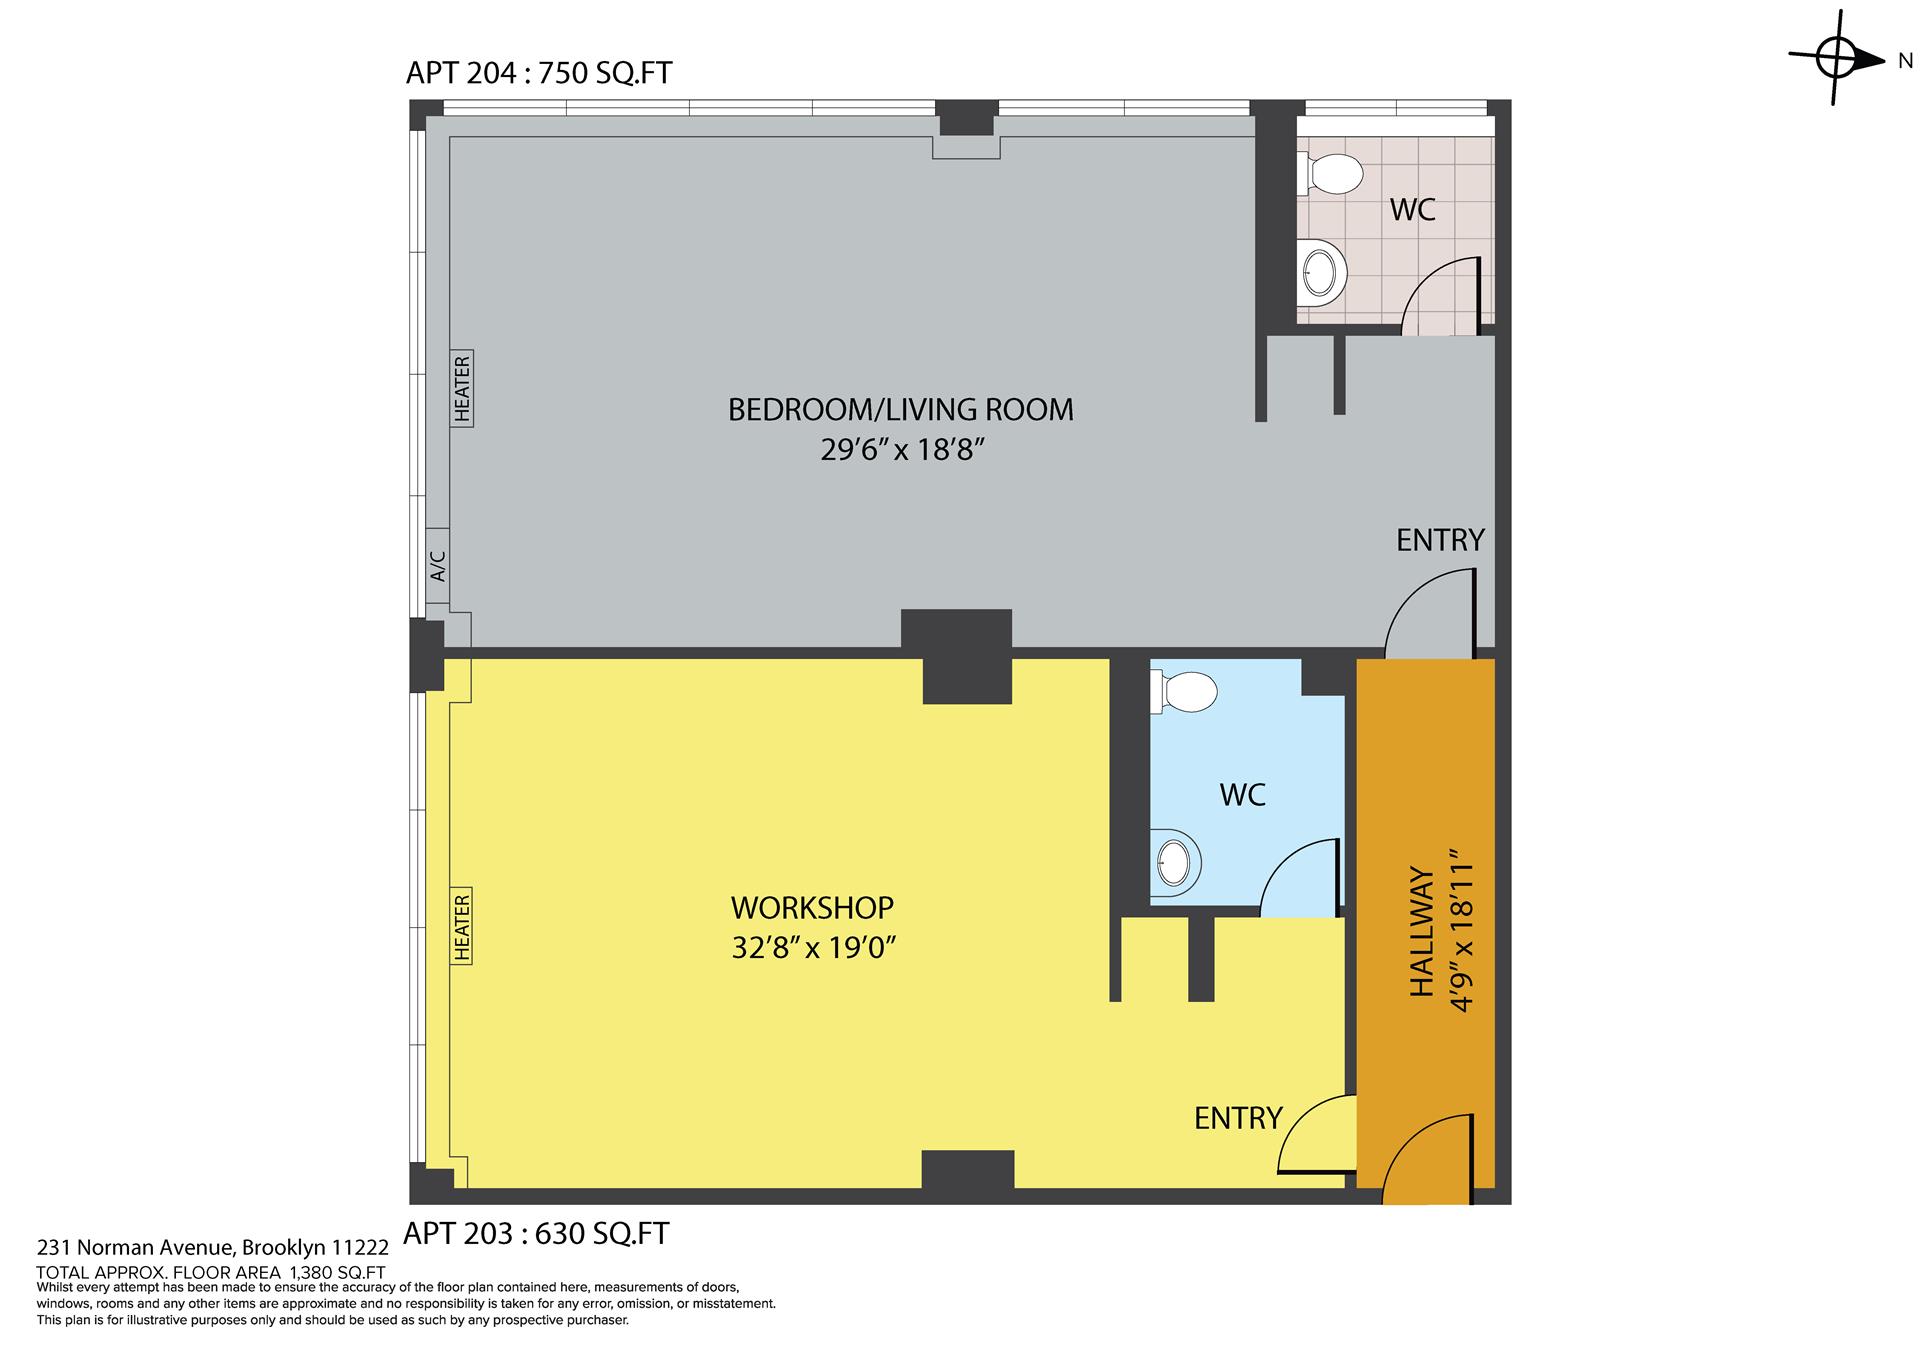 Floorplan for 231 Norman Avenue, 203